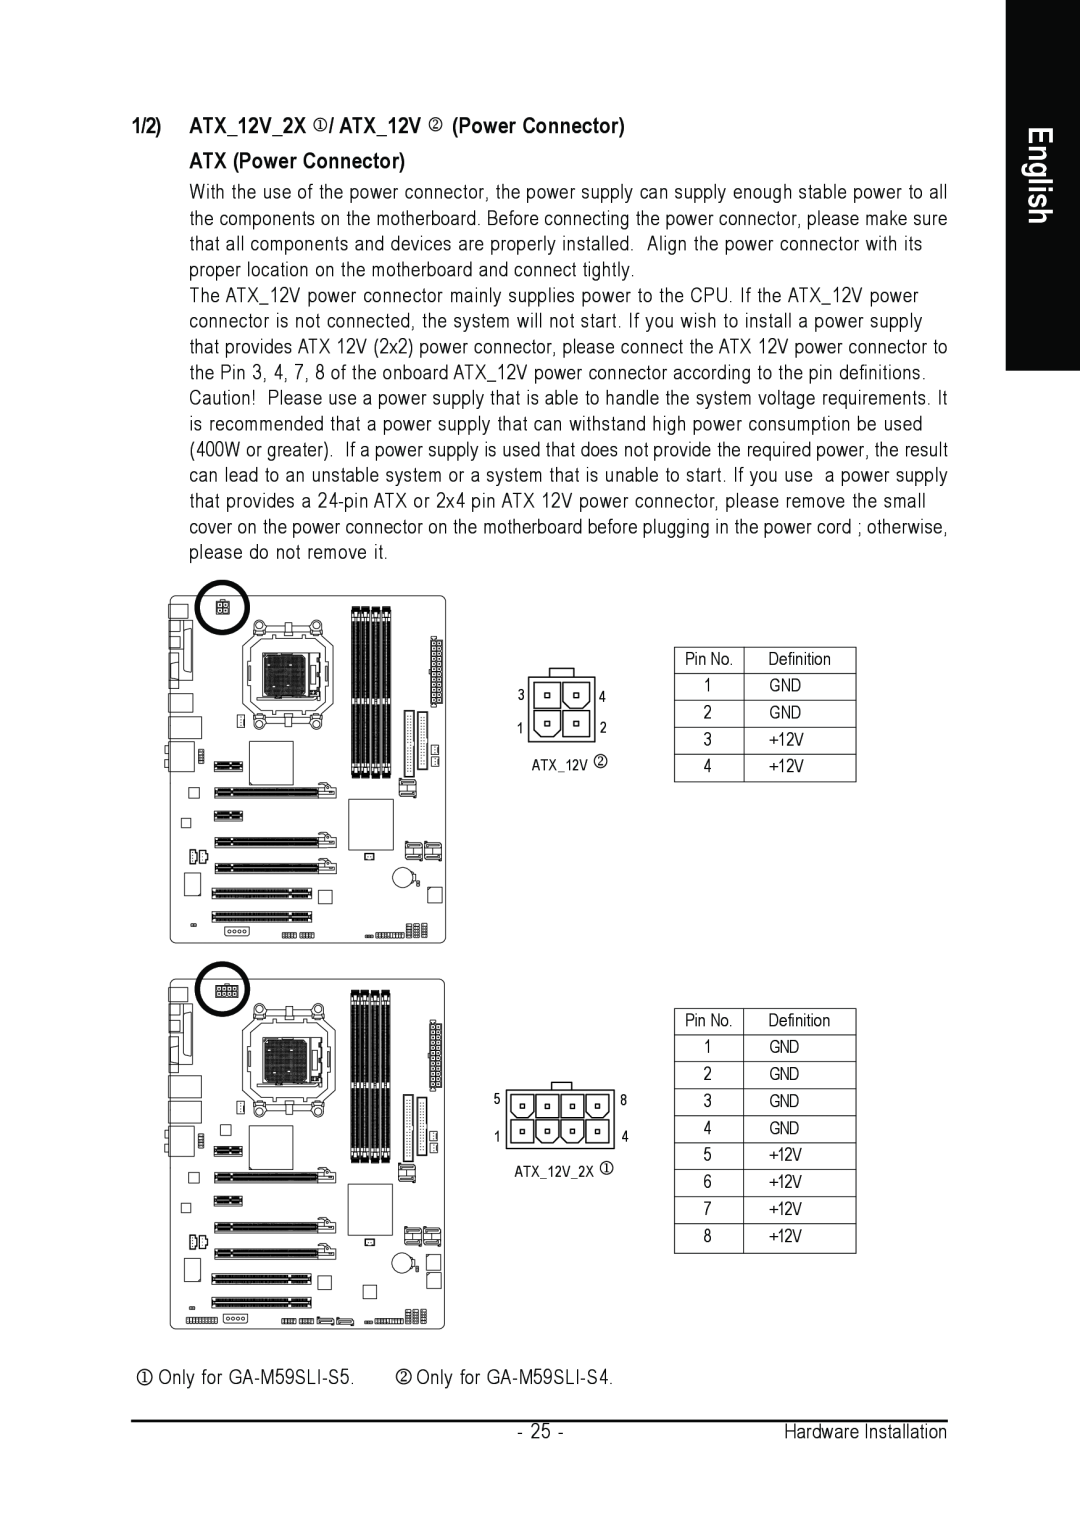 Gigabyte GA-M59SLI-S4, GA-M59SLI-S5 user manual 1/2 ATX12V2X / ATX12V Power Connector ATX Power Connector, English 